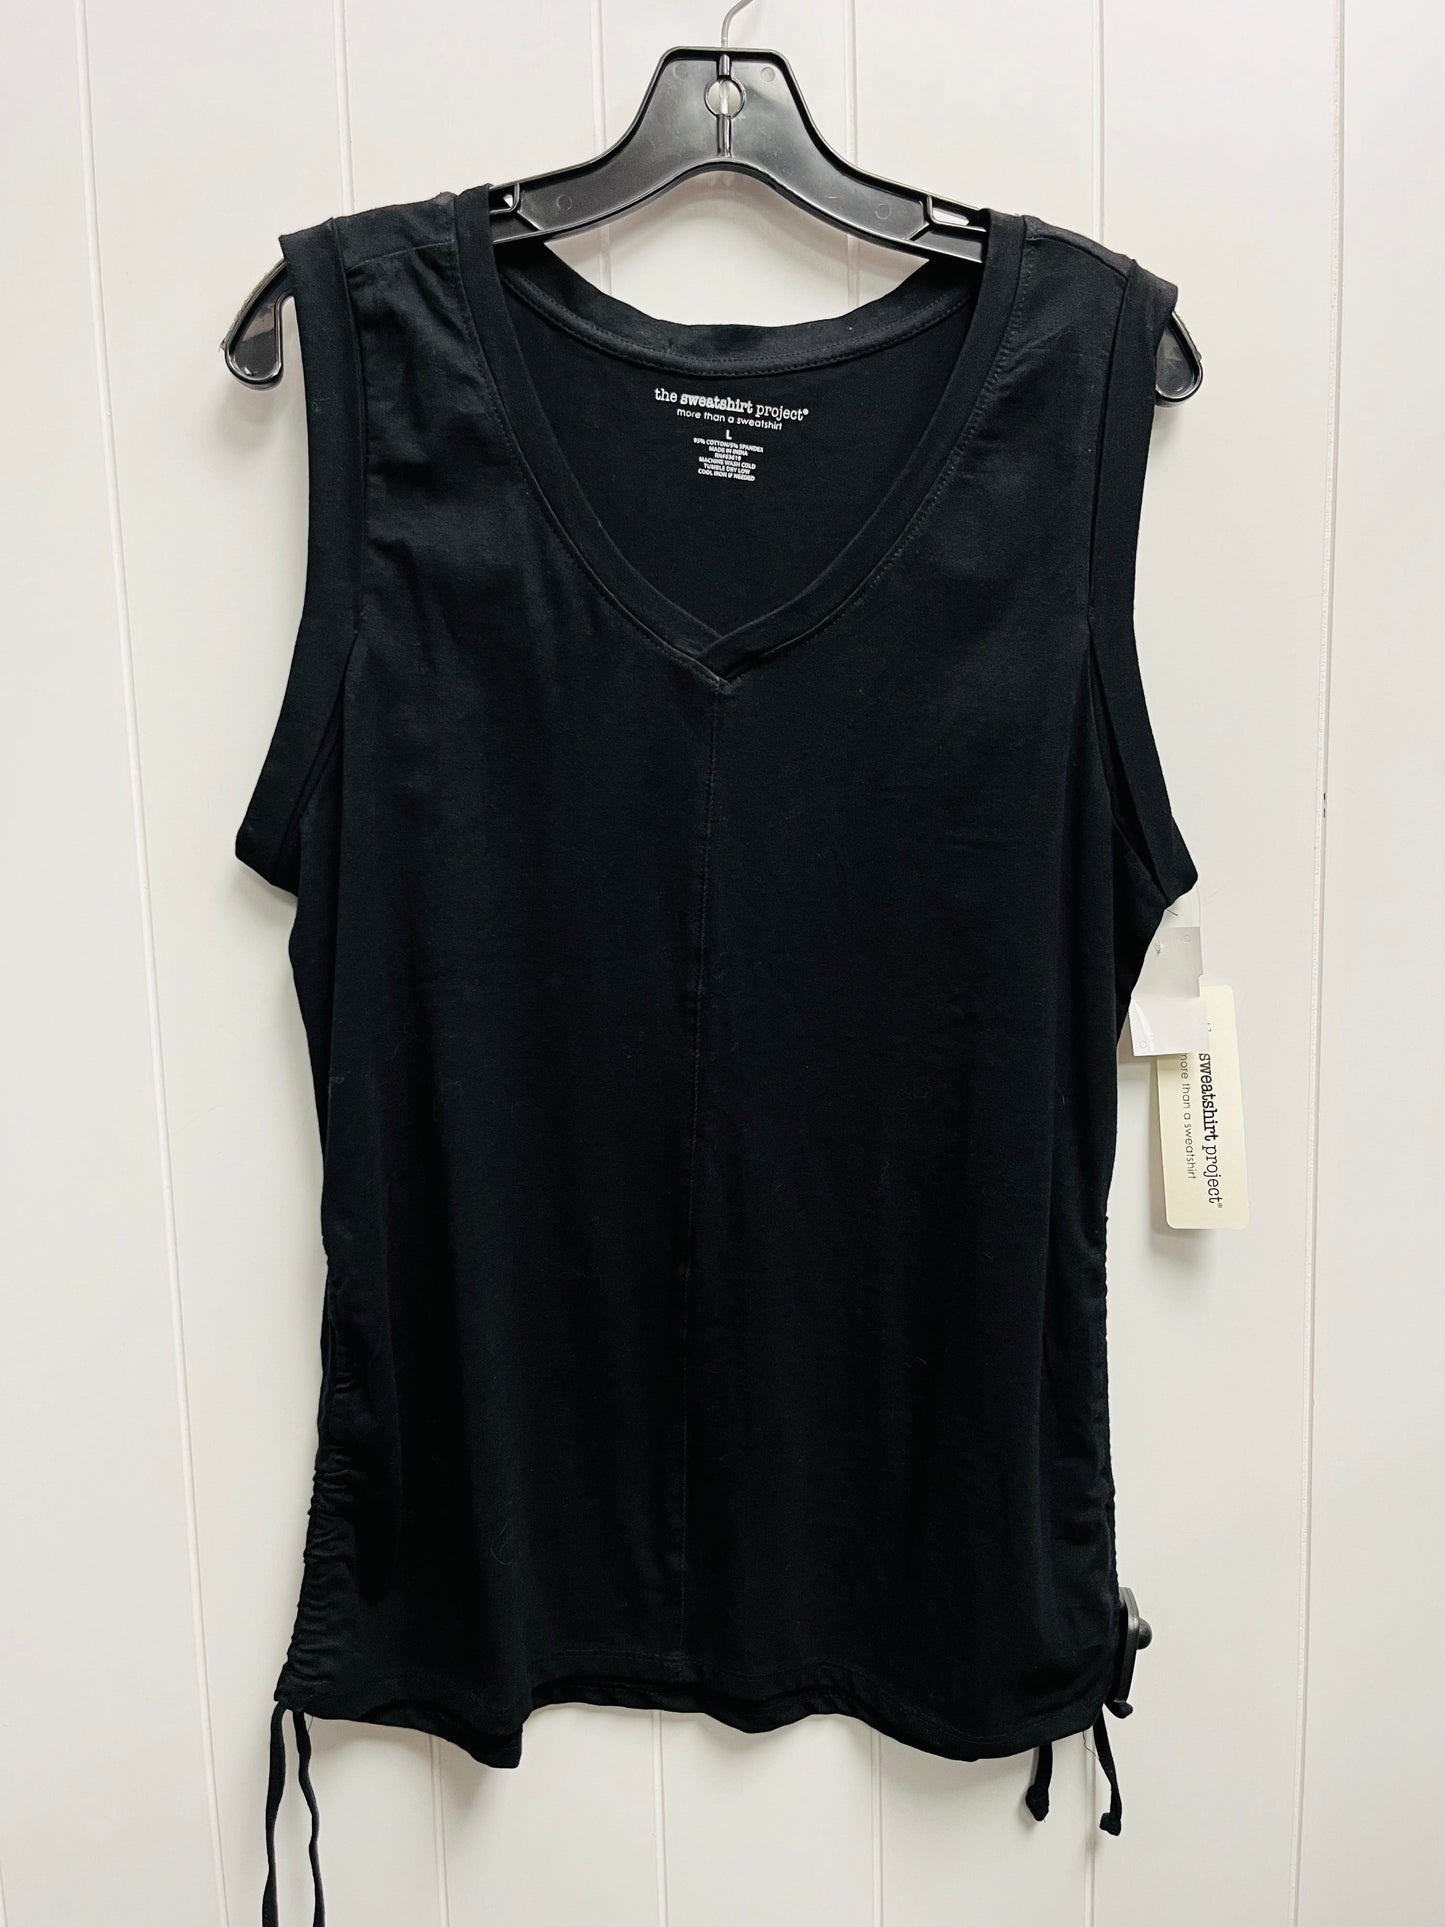 Black Top Short Sleeve sweatshirt project, Size L